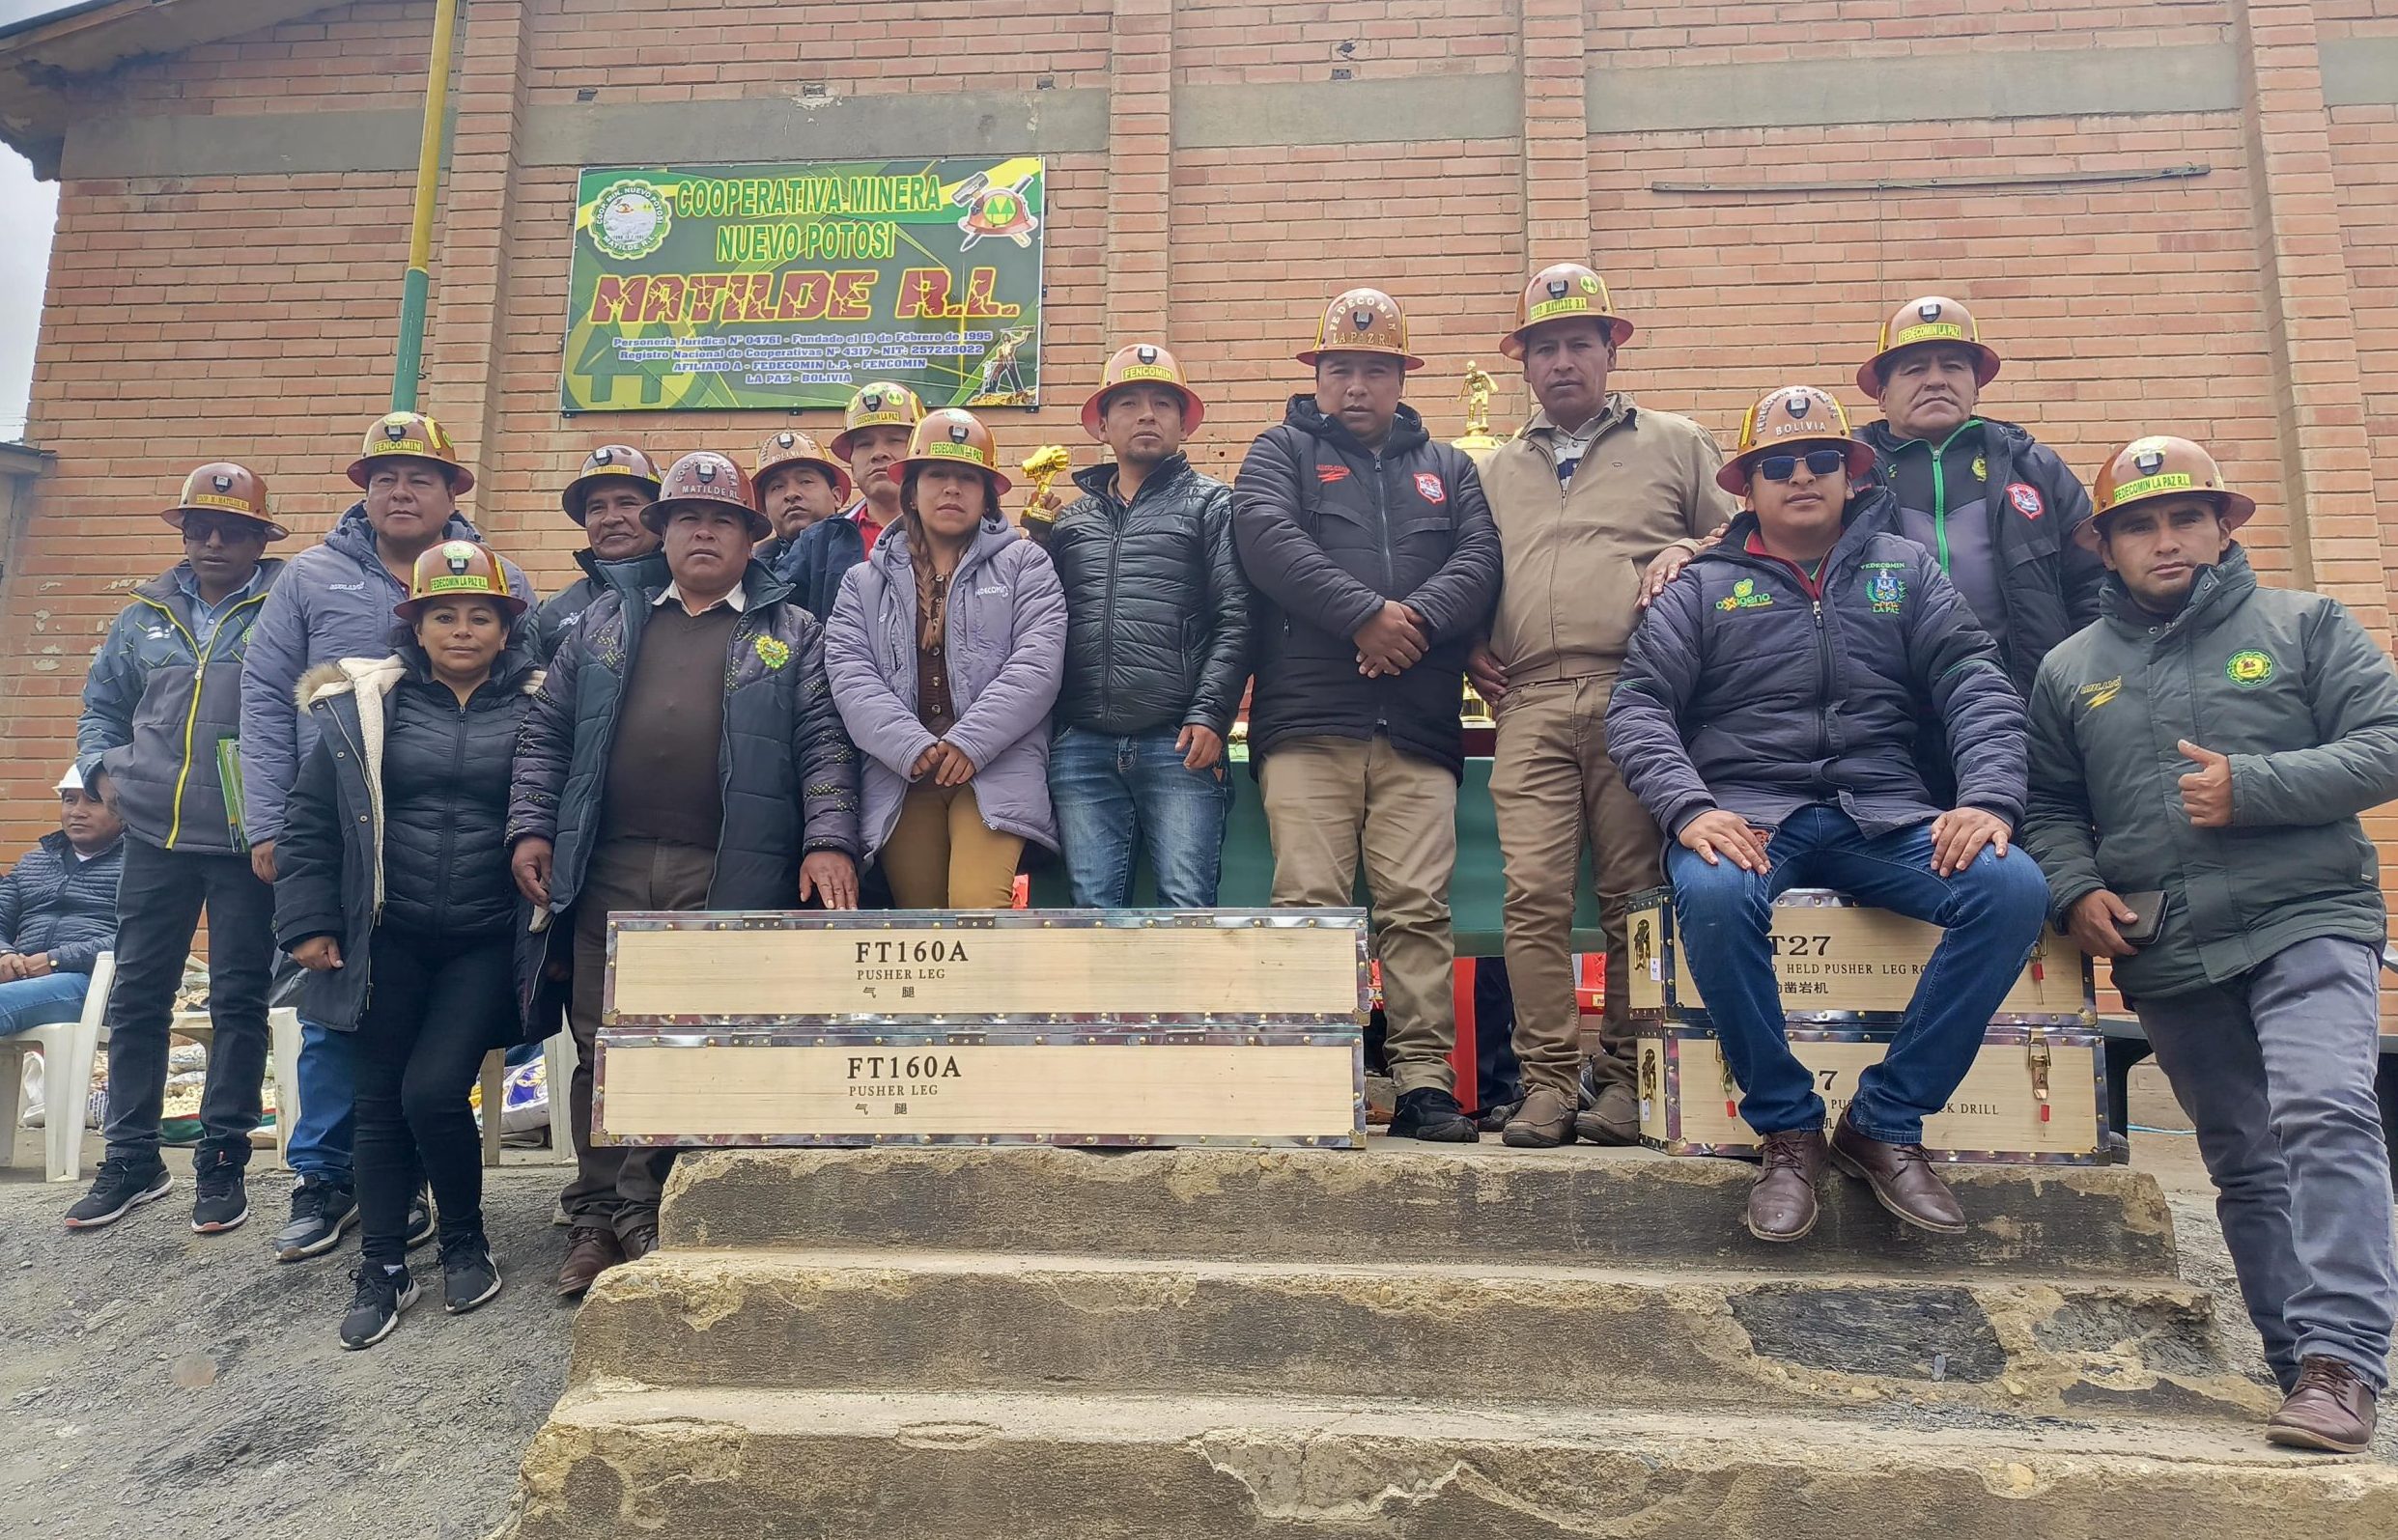 La Cooperativa Minera «Nuevo Potosí Matilde» R.L. festejó sus XXXV años de vida institucional